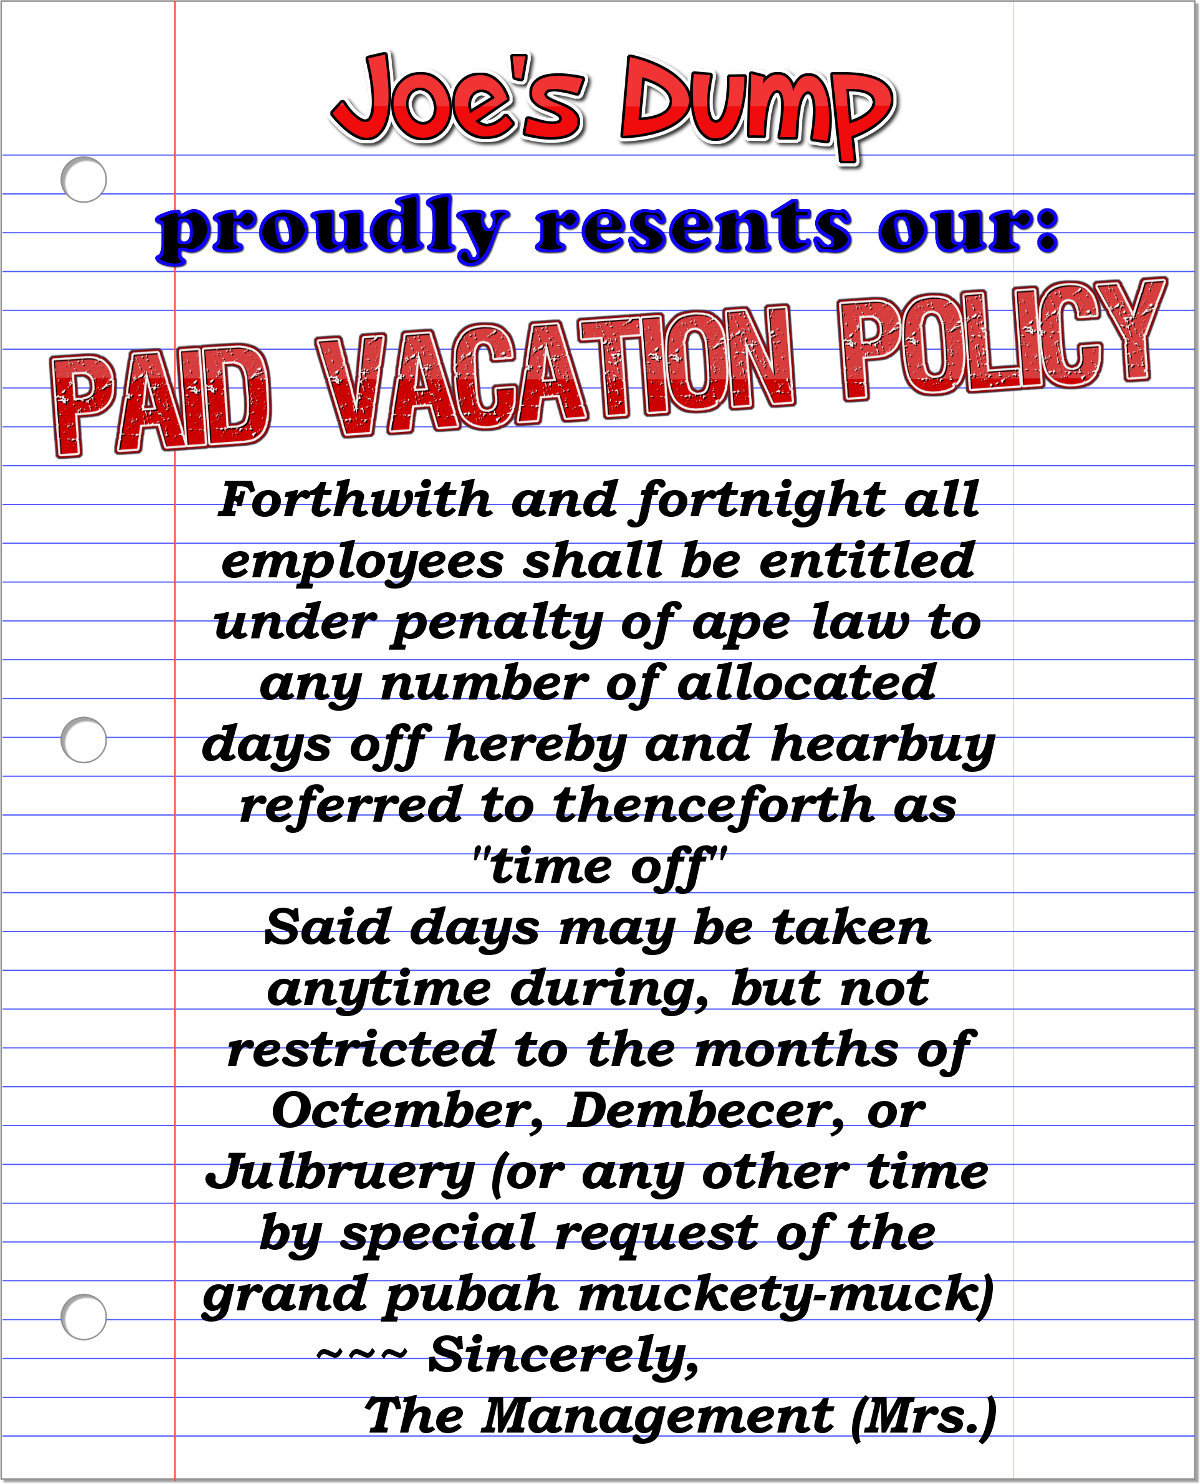 Joe's Dump: Paid Vacation Policy